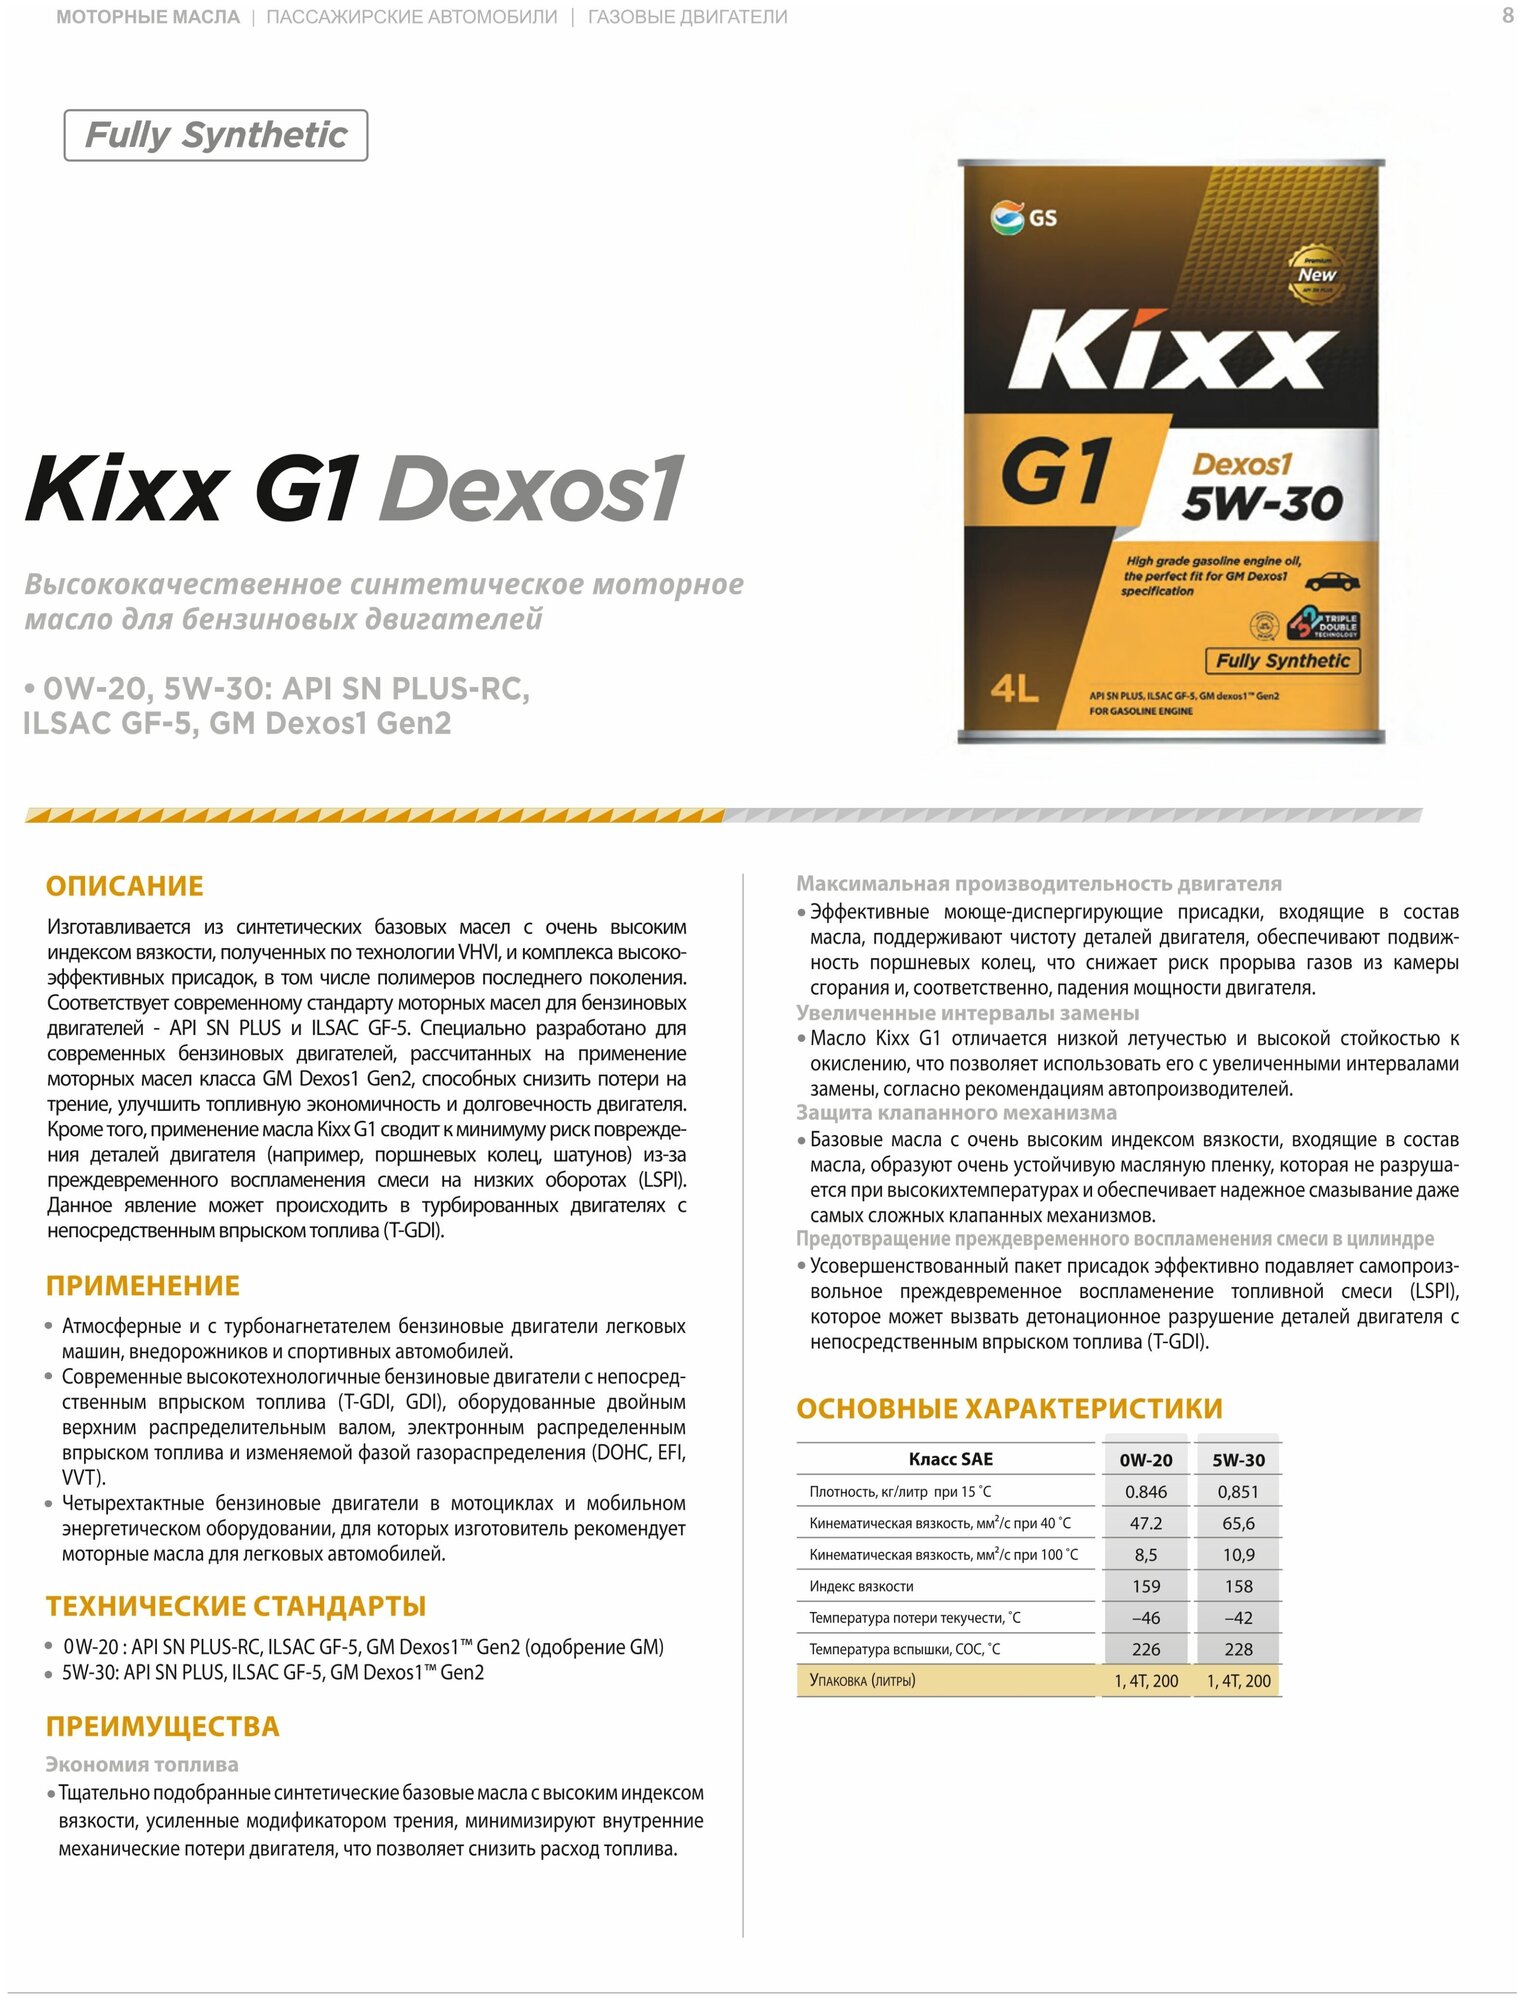 Синтетическое моторное масло Kixx G1 Dexos1 5W-30 SN Plus